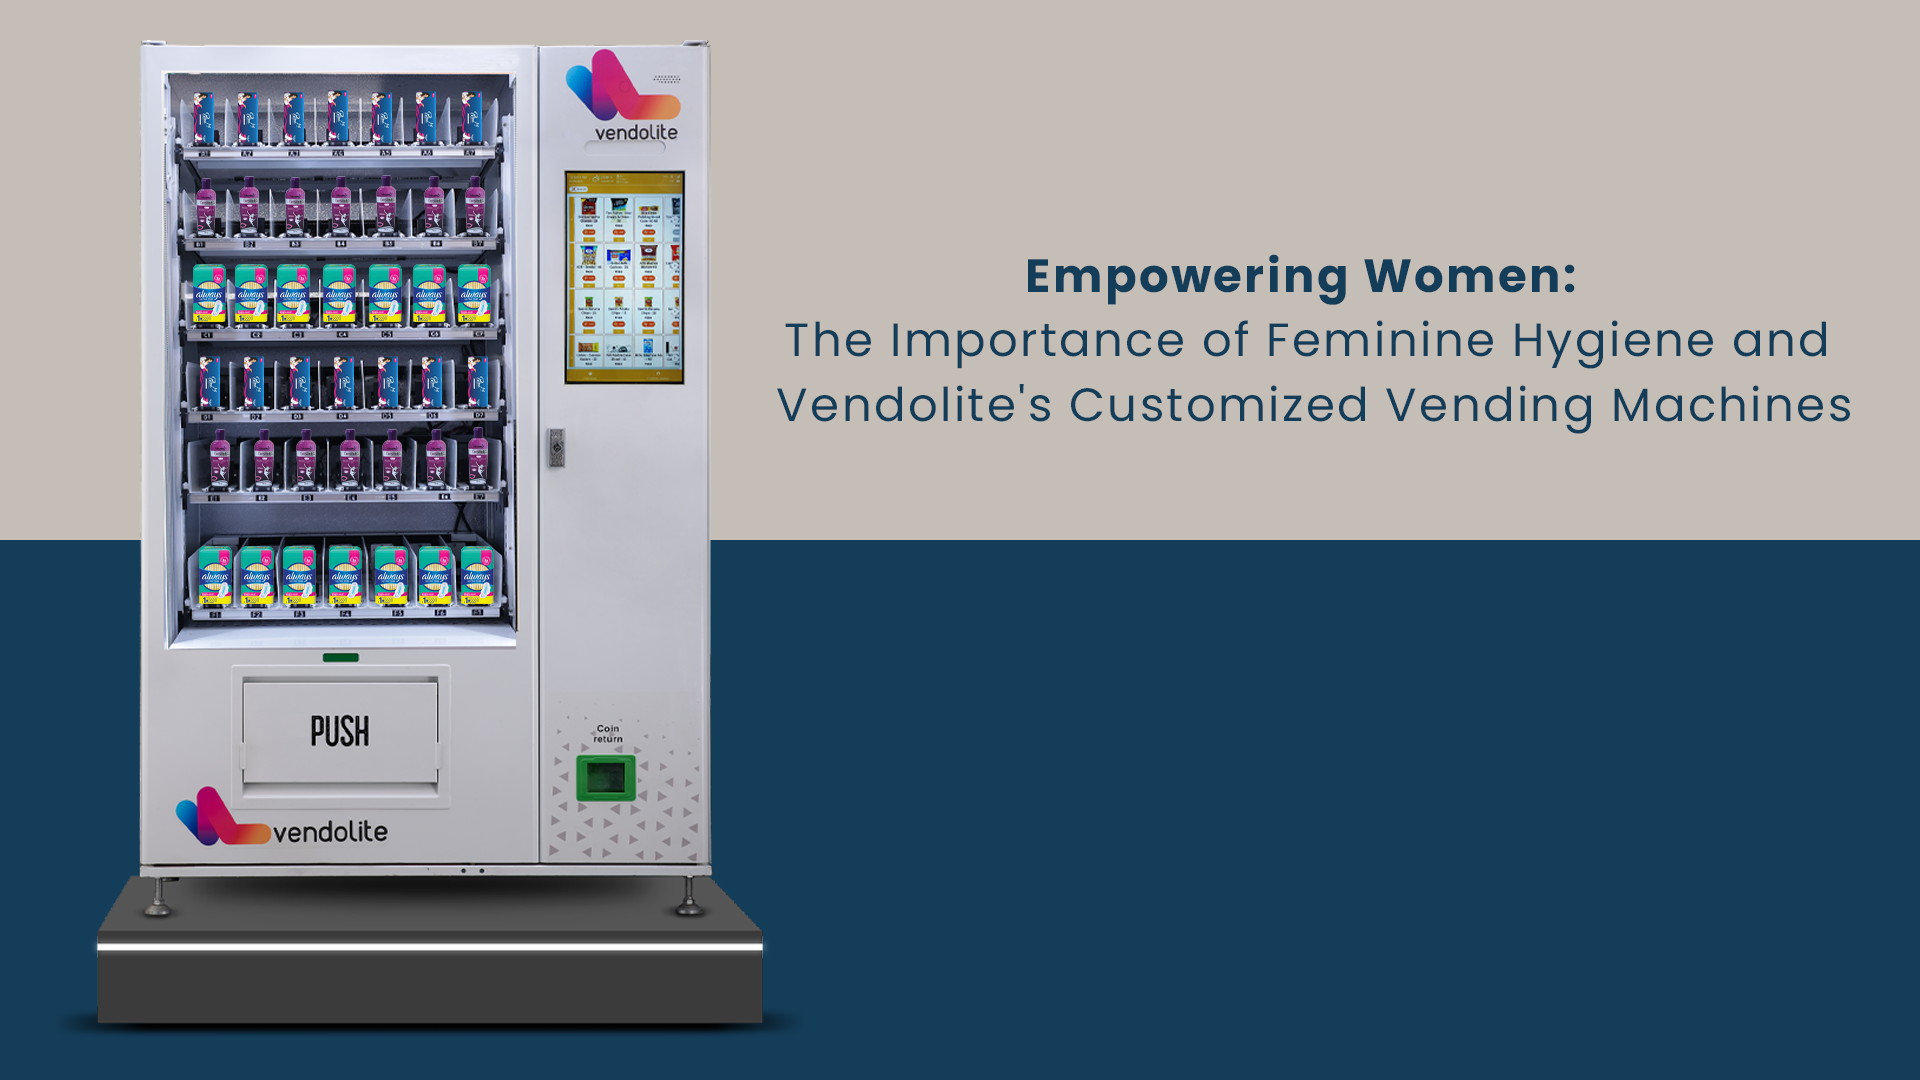 Empowering Women: The Importance of Feminine Hygiene and Vendolite's Customized Vending Machines